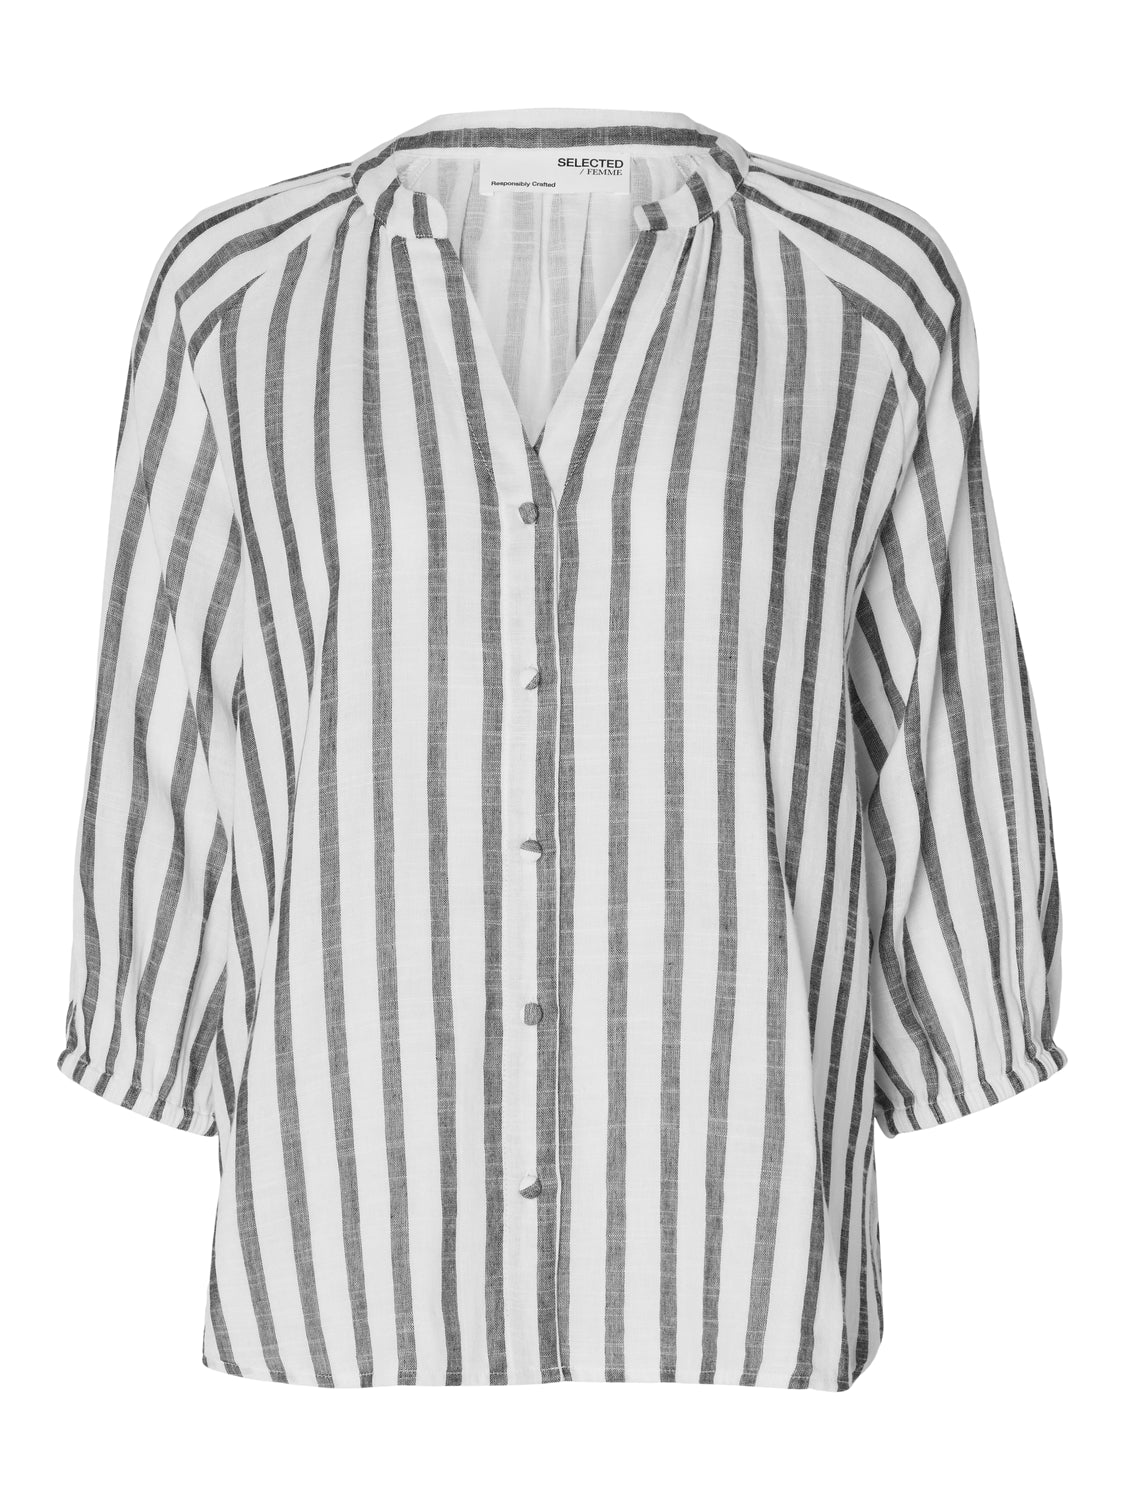 Selected Femme "Alberta" 3/4 Stripe Shirt